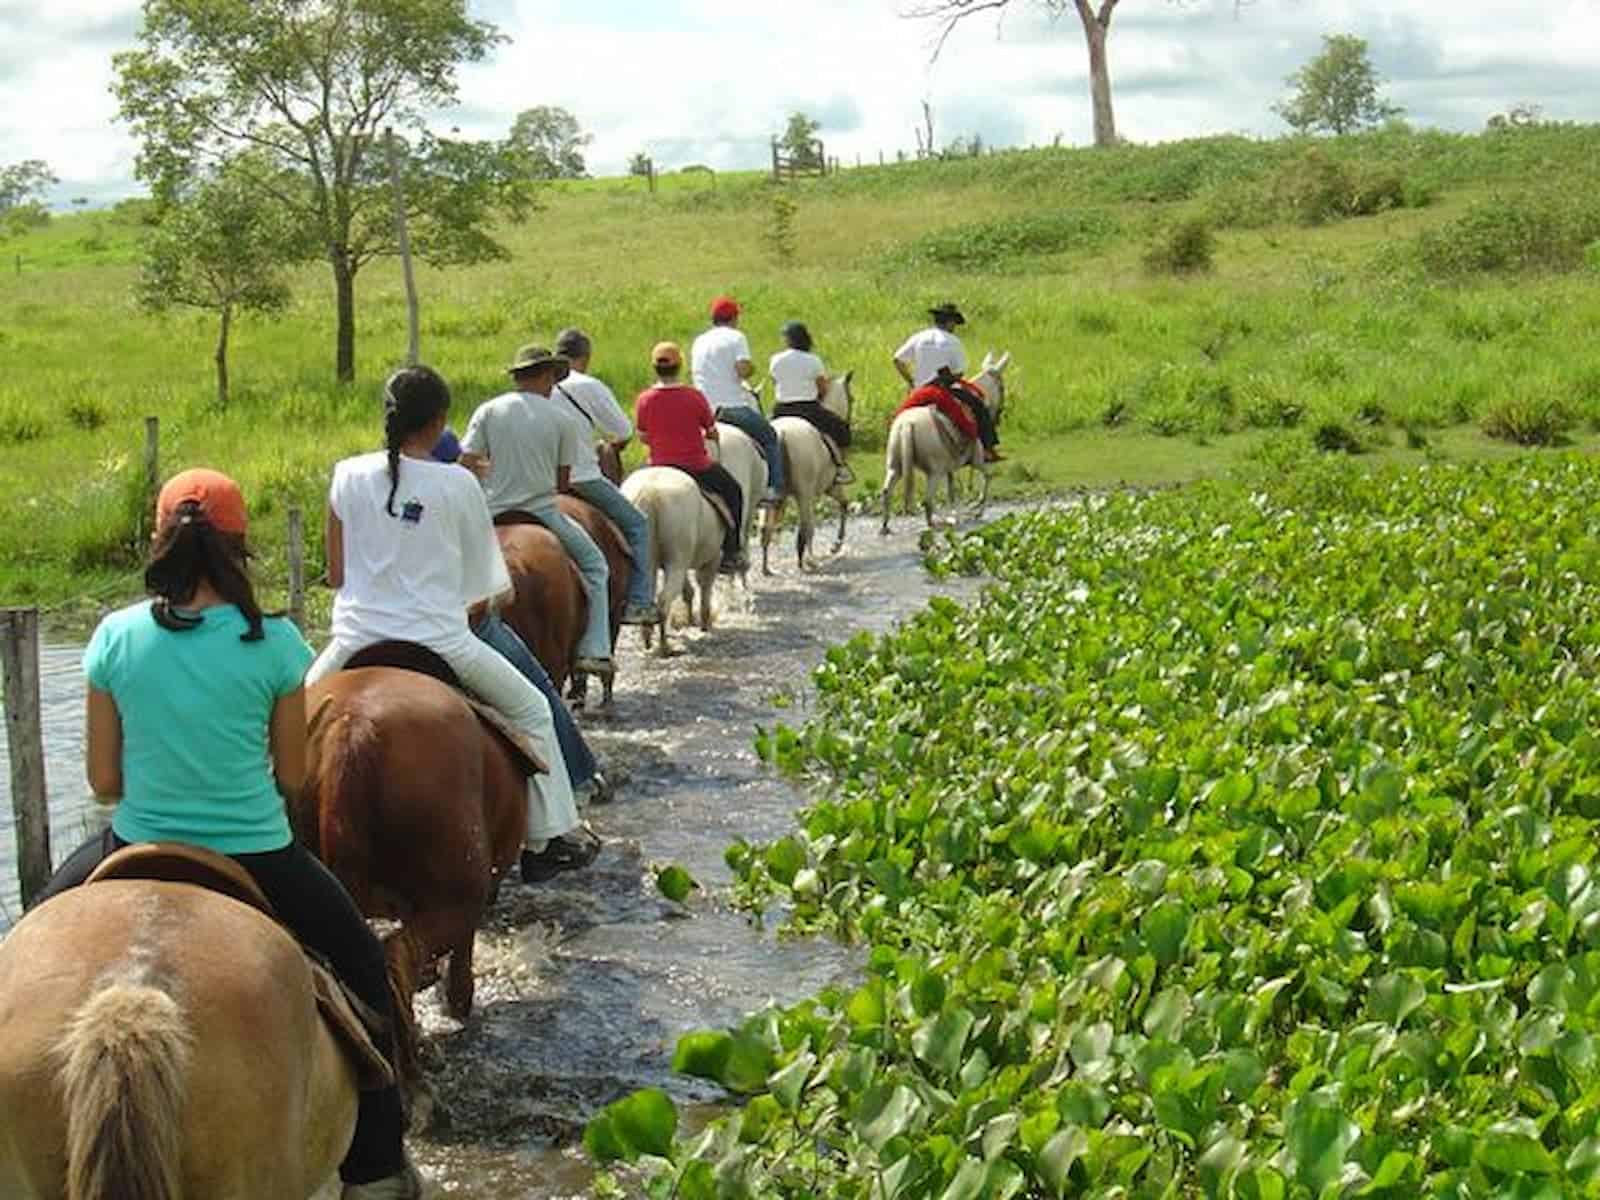 Ride through Pantanal